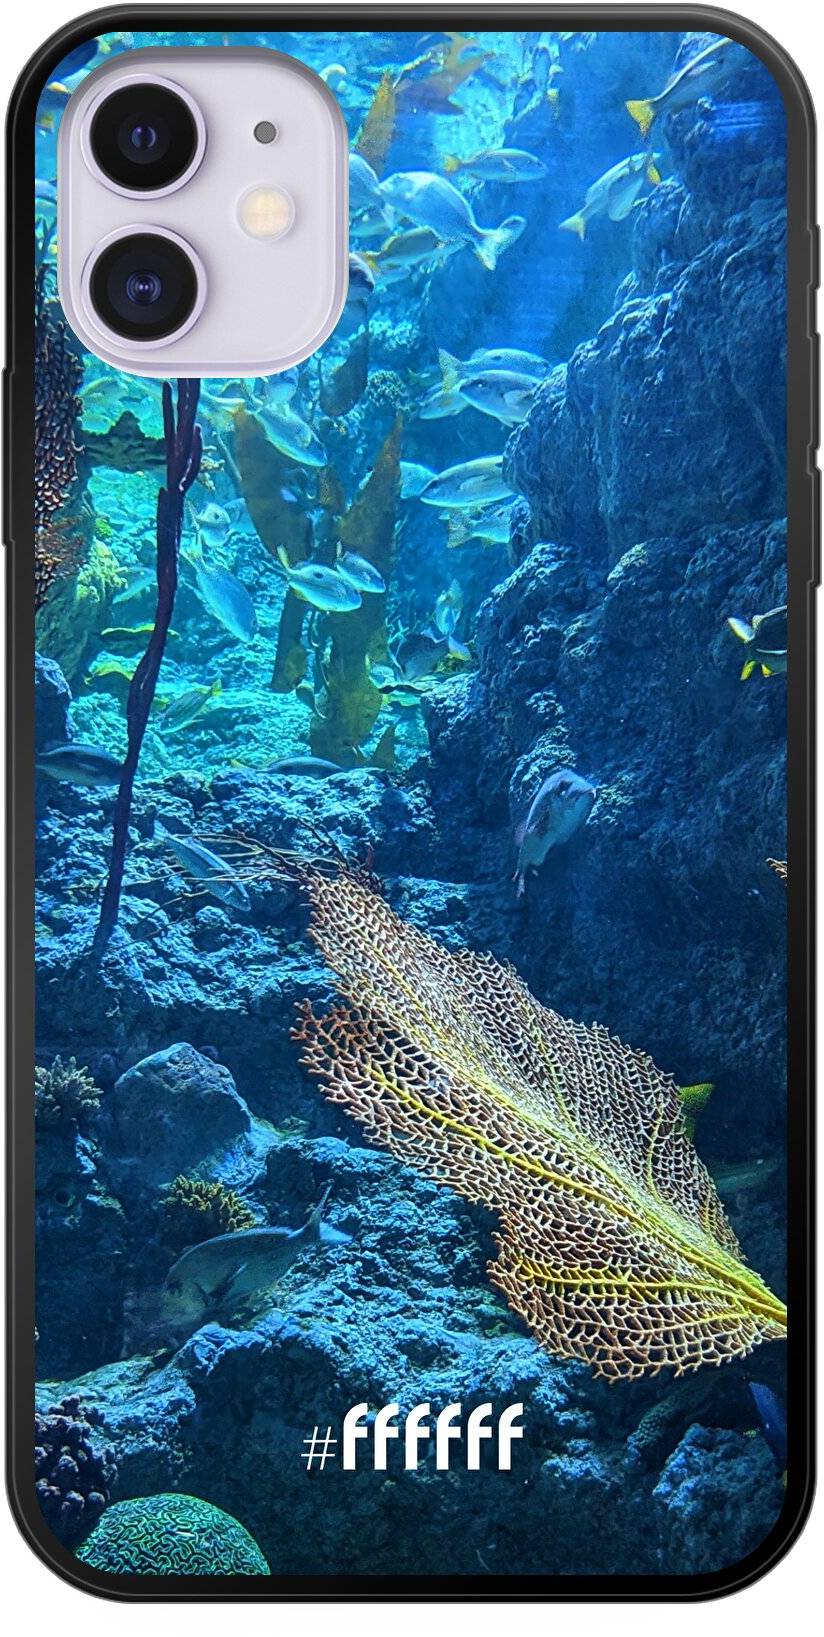 Coral Reef iPhone 11